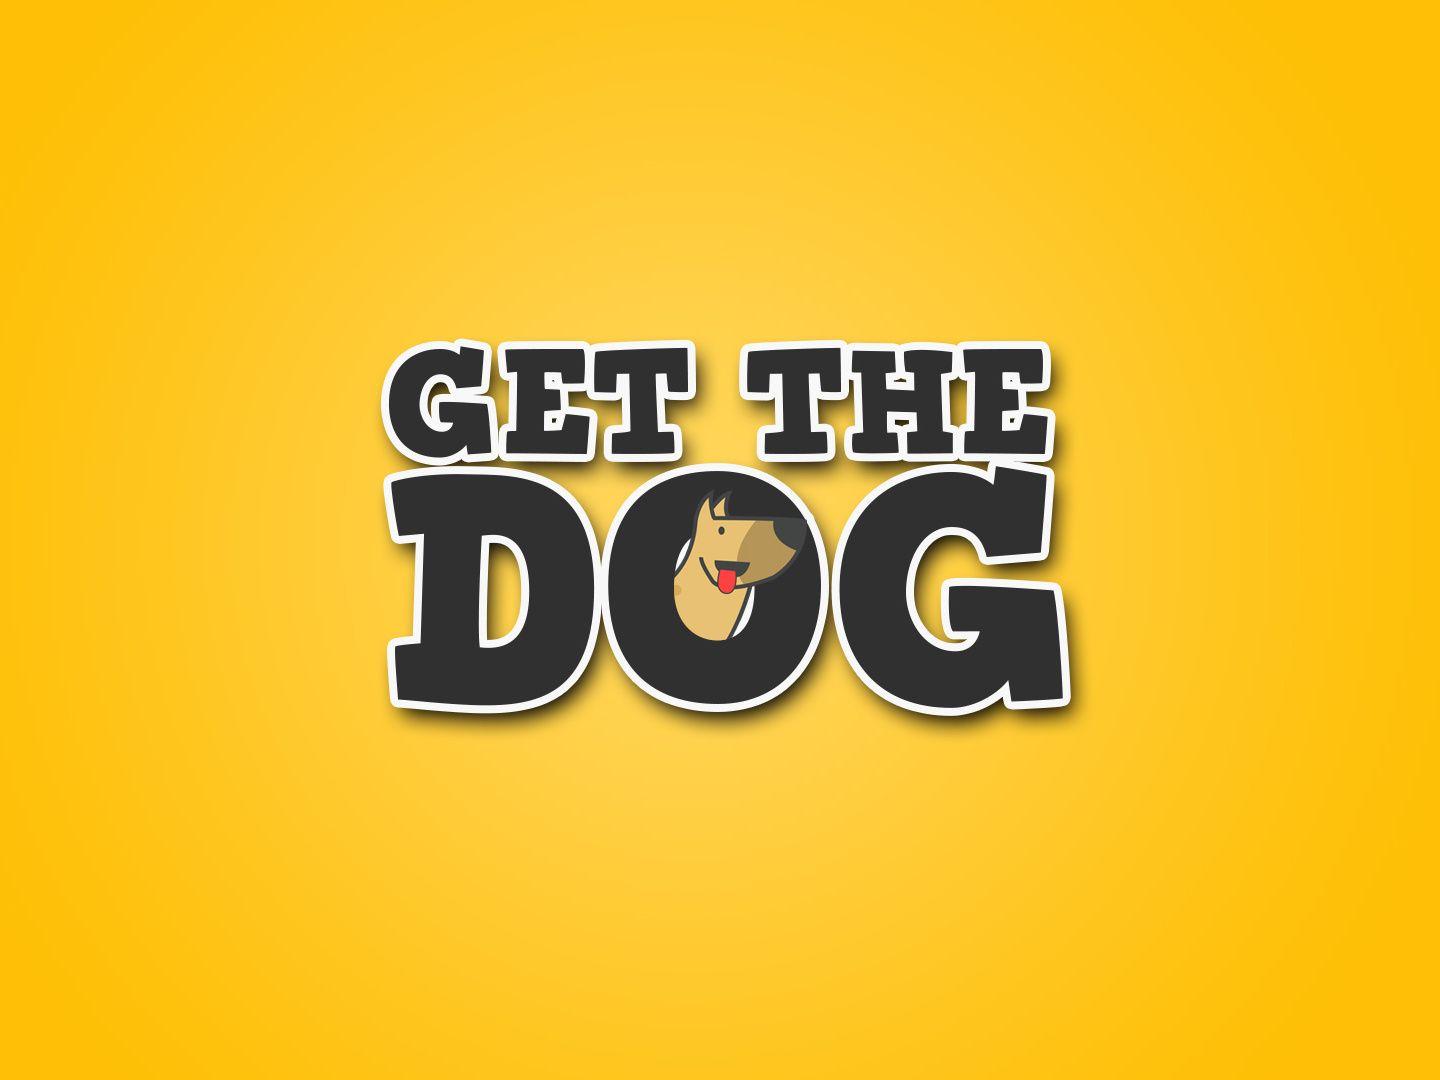 Get Logo - Get the dog game logo design by Shahinur Rashid Tuhin on Dribbble